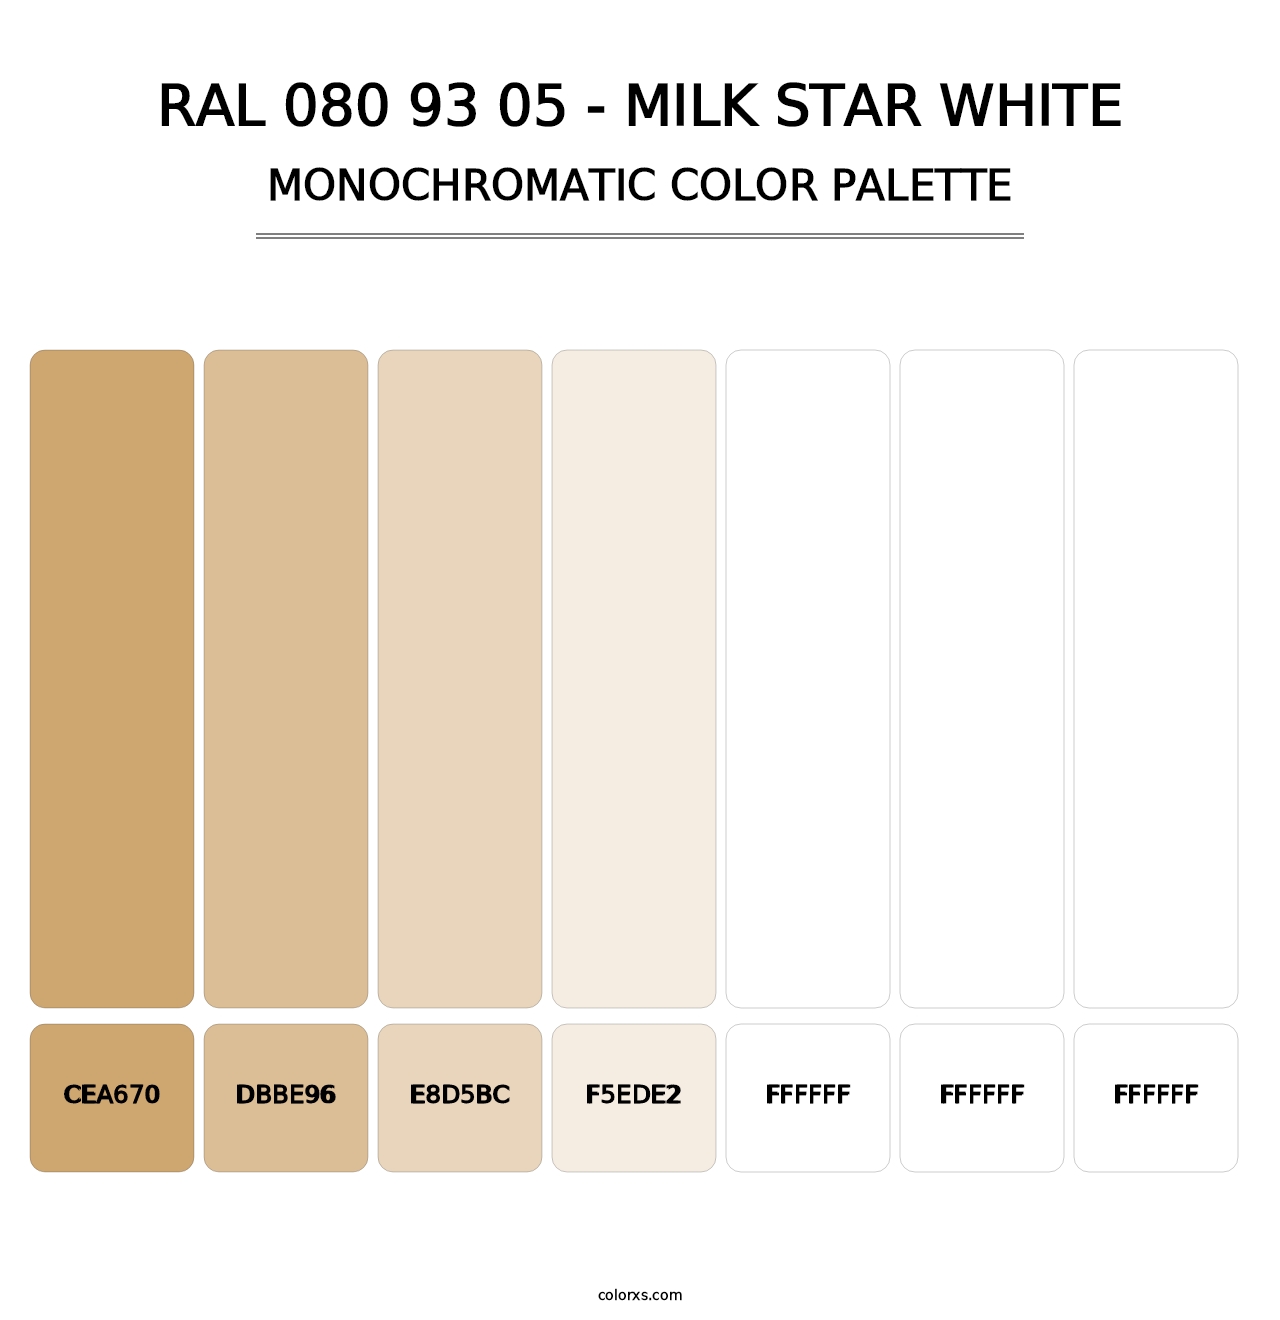 RAL 080 93 05 - Milk Star White - Monochromatic Color Palette